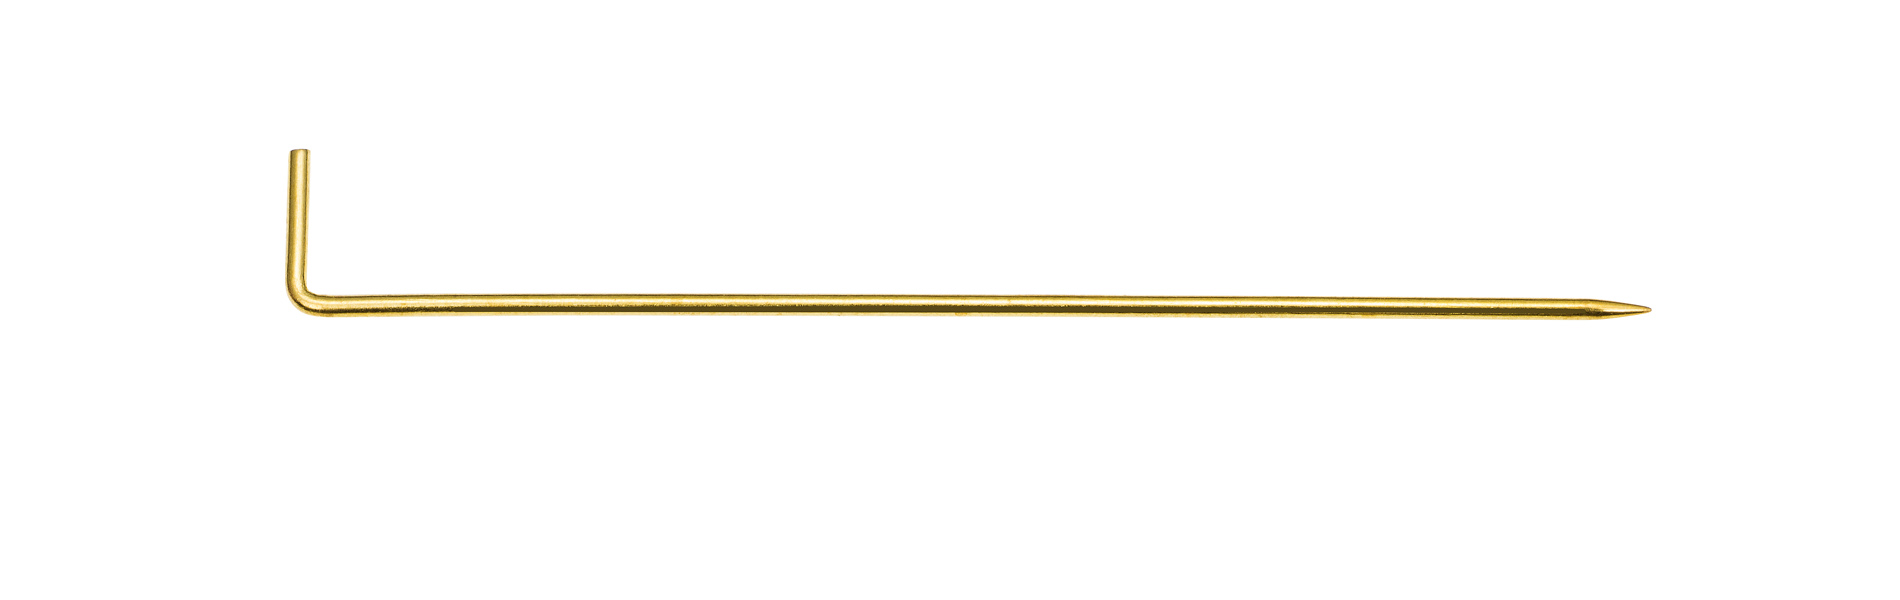 Ref.: 64540 - Latón - Long. 57 mm